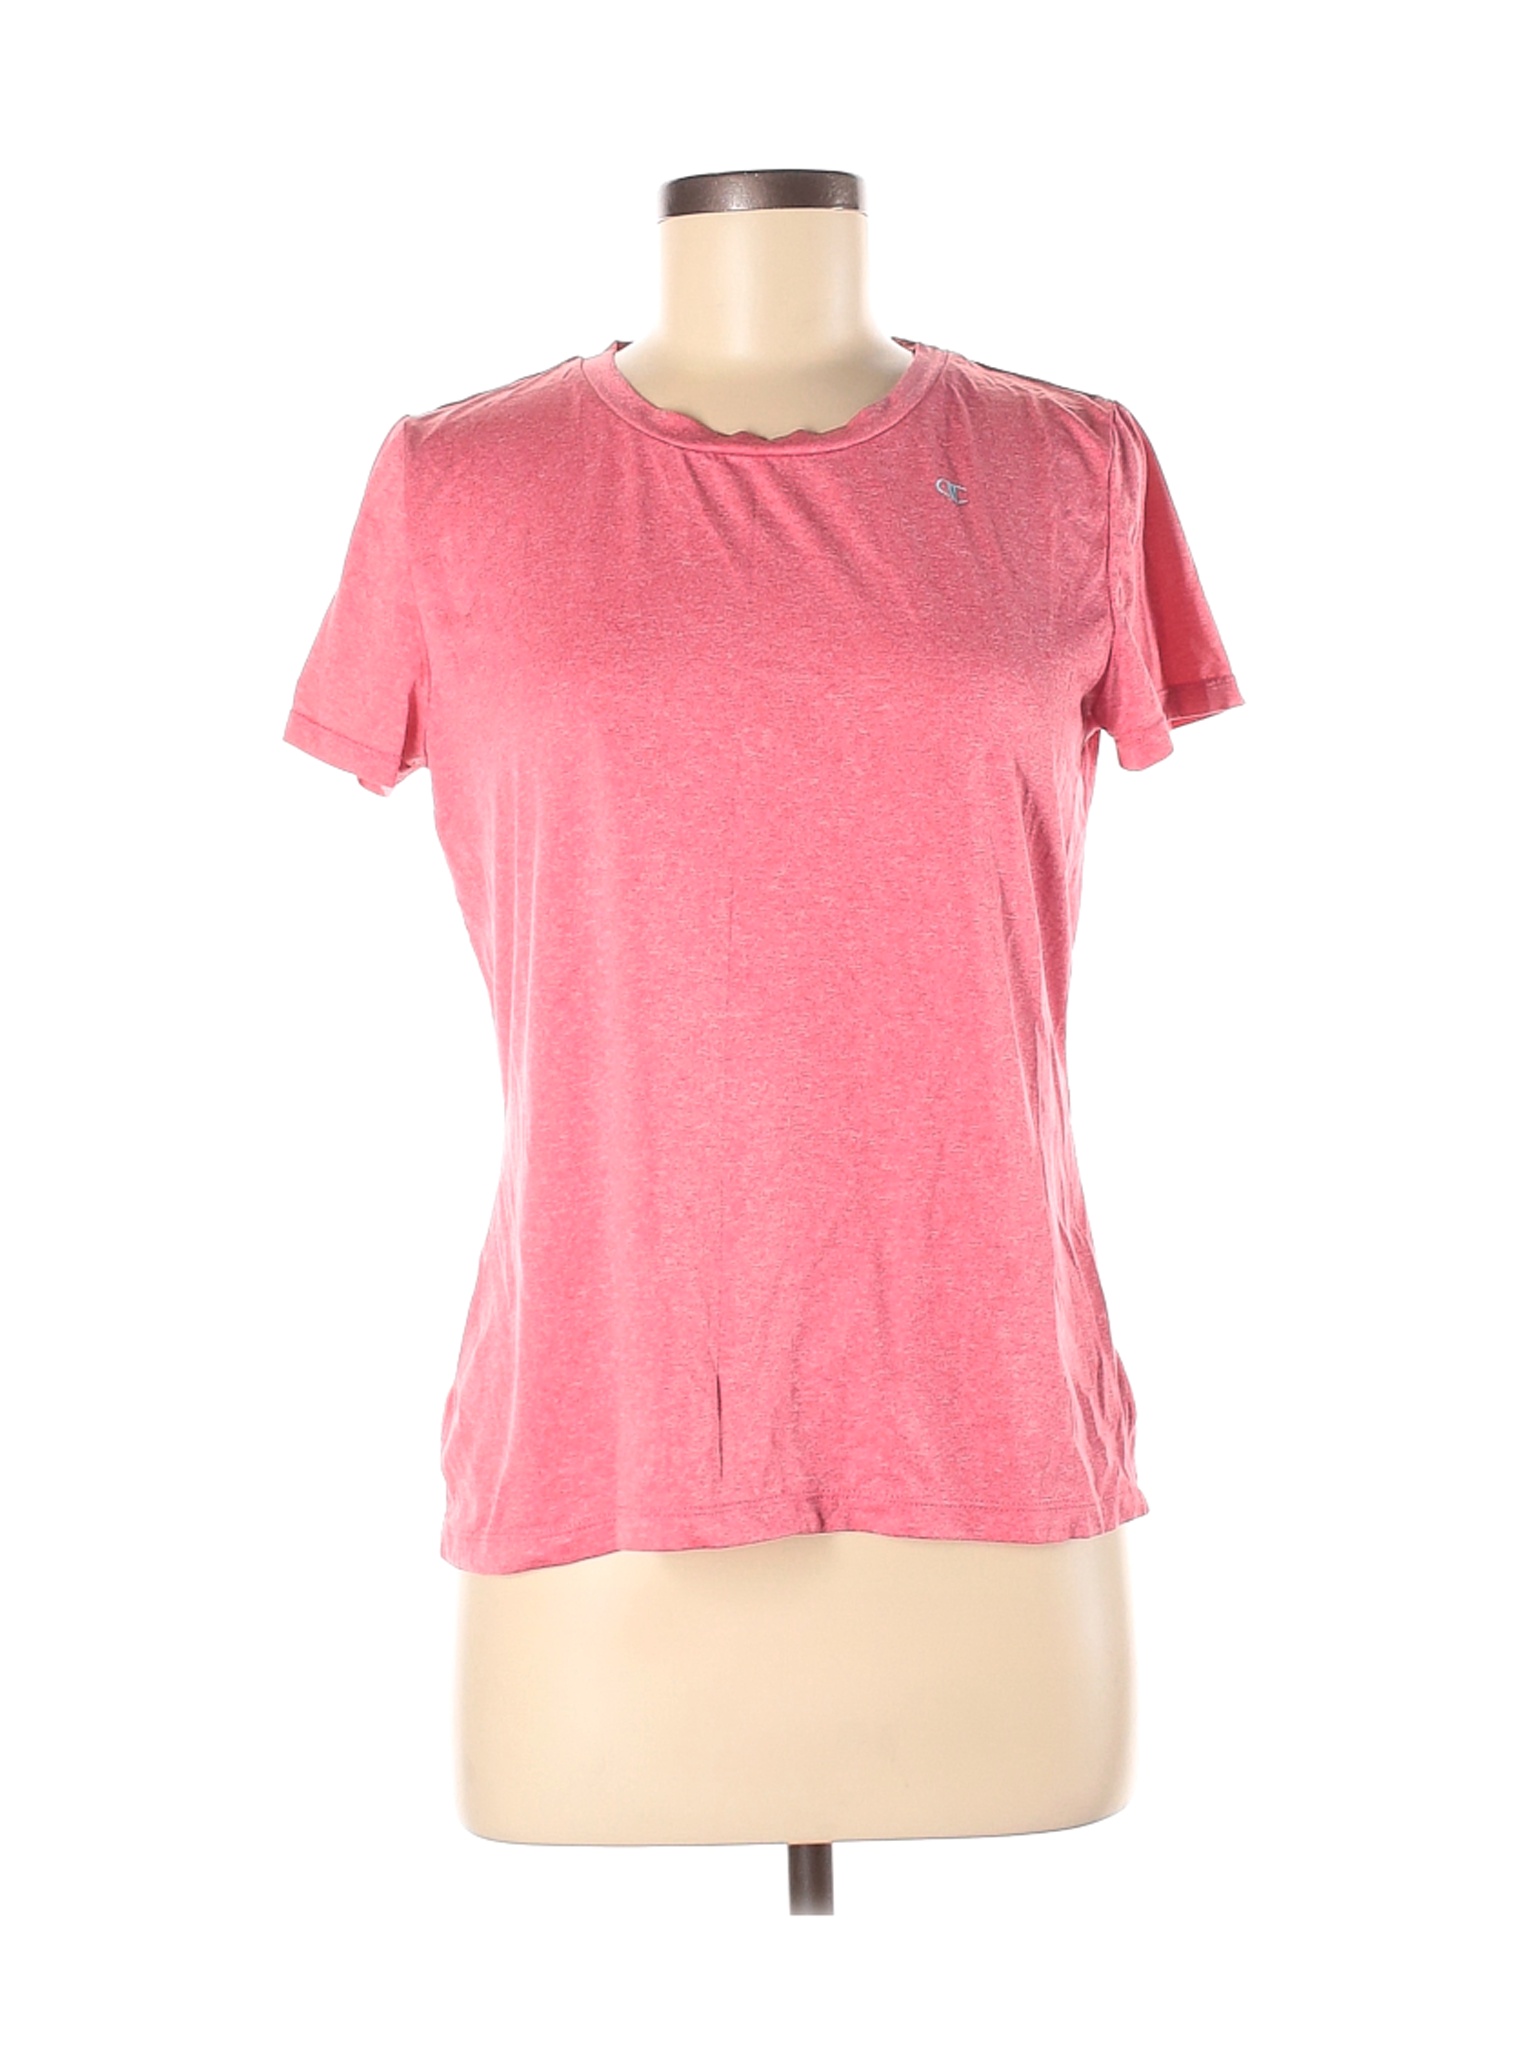 Champion Women Pink Active T-Shirt M | eBay